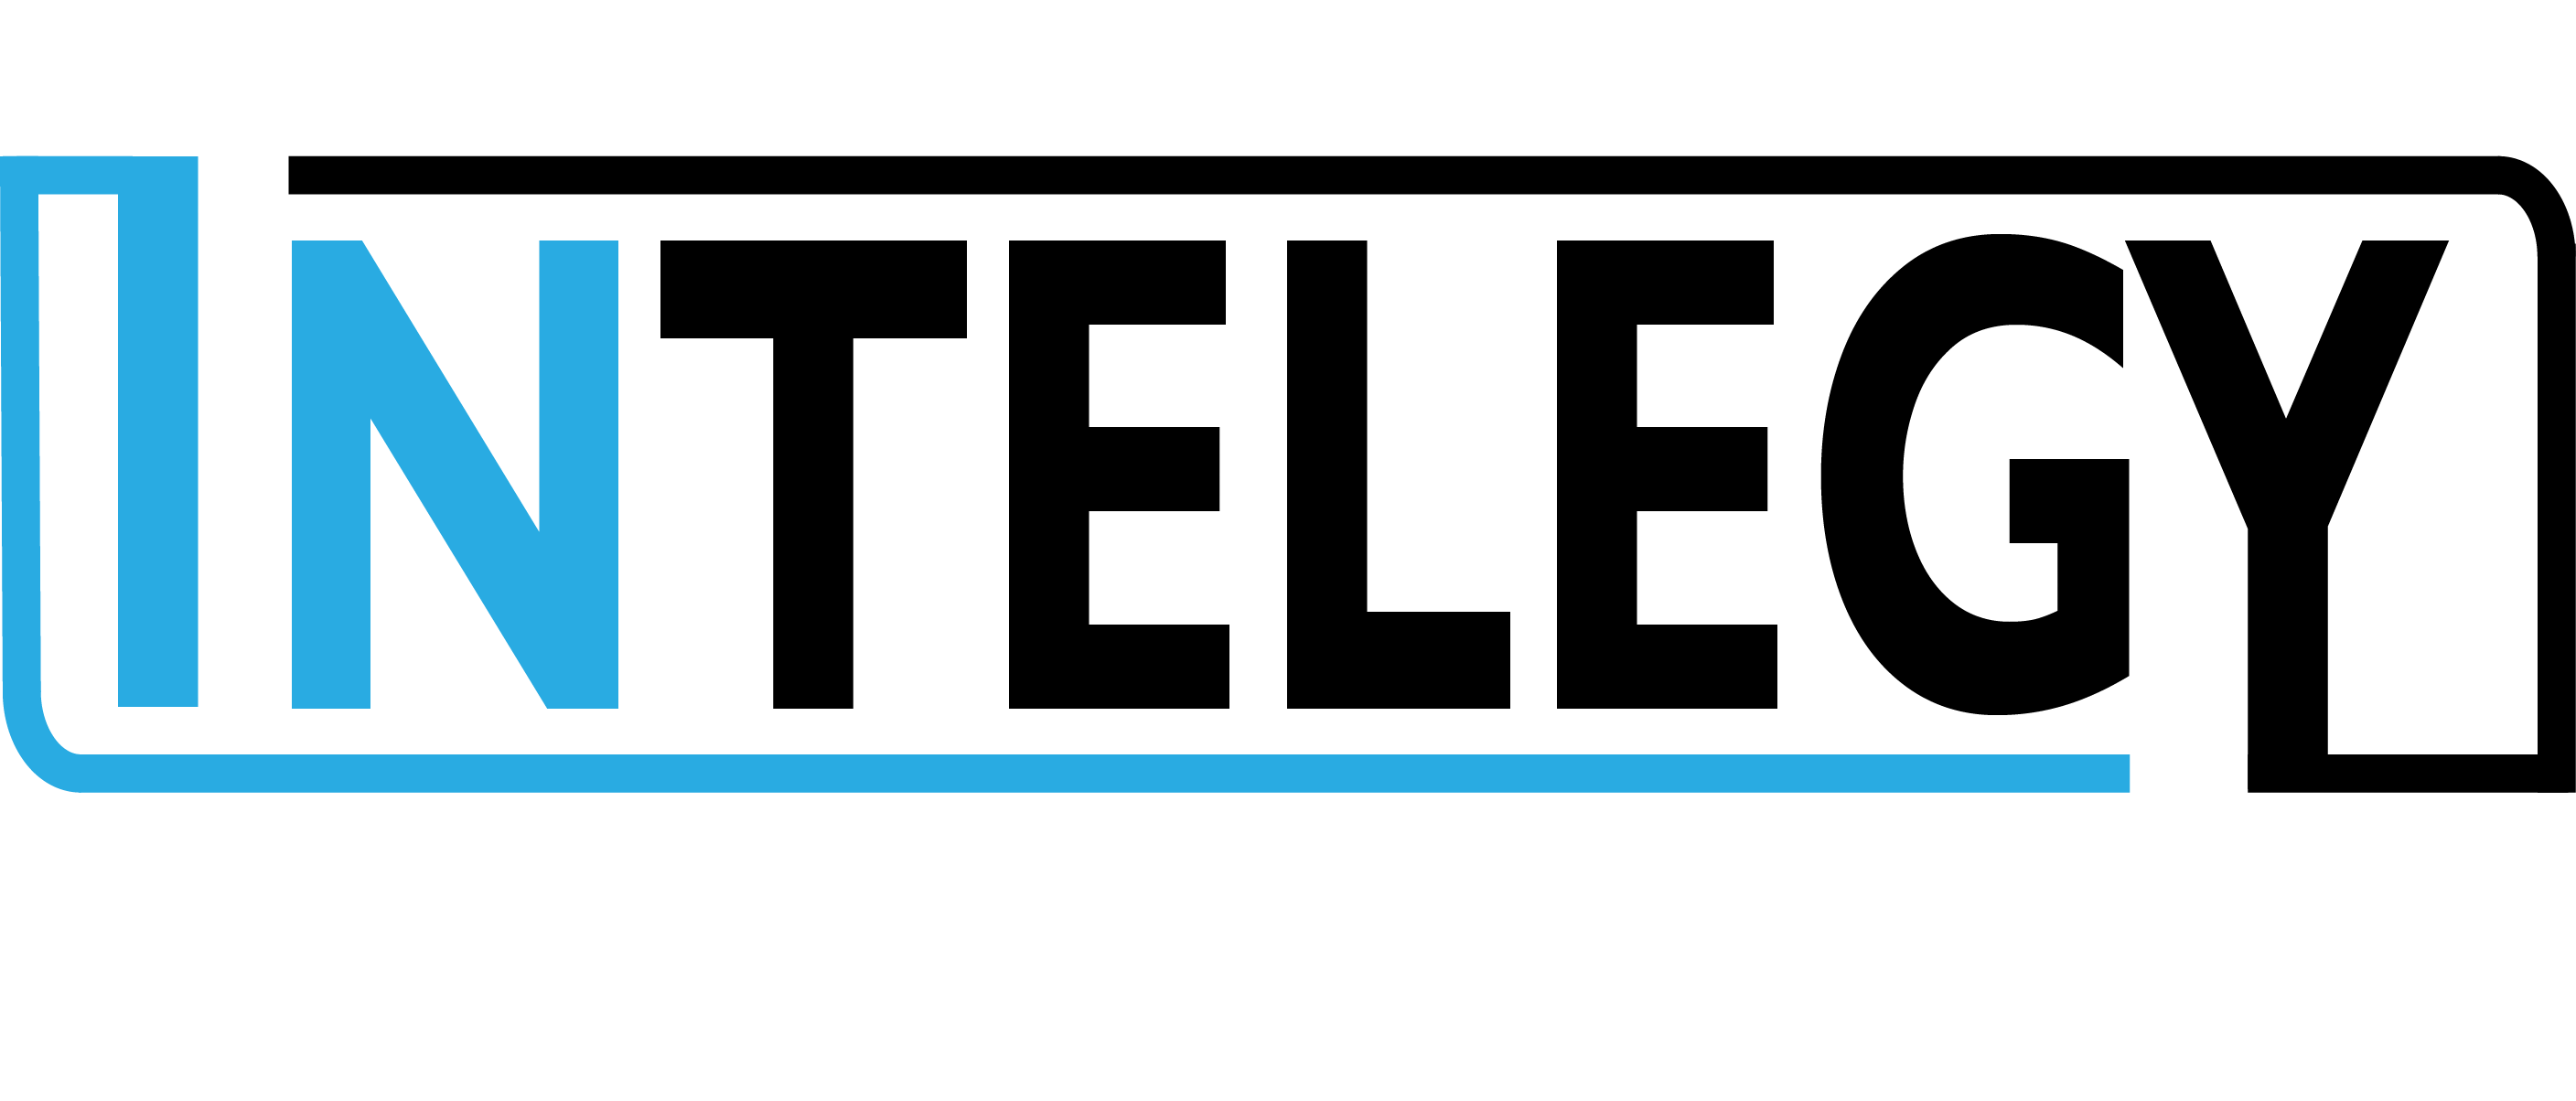 intelegy logo